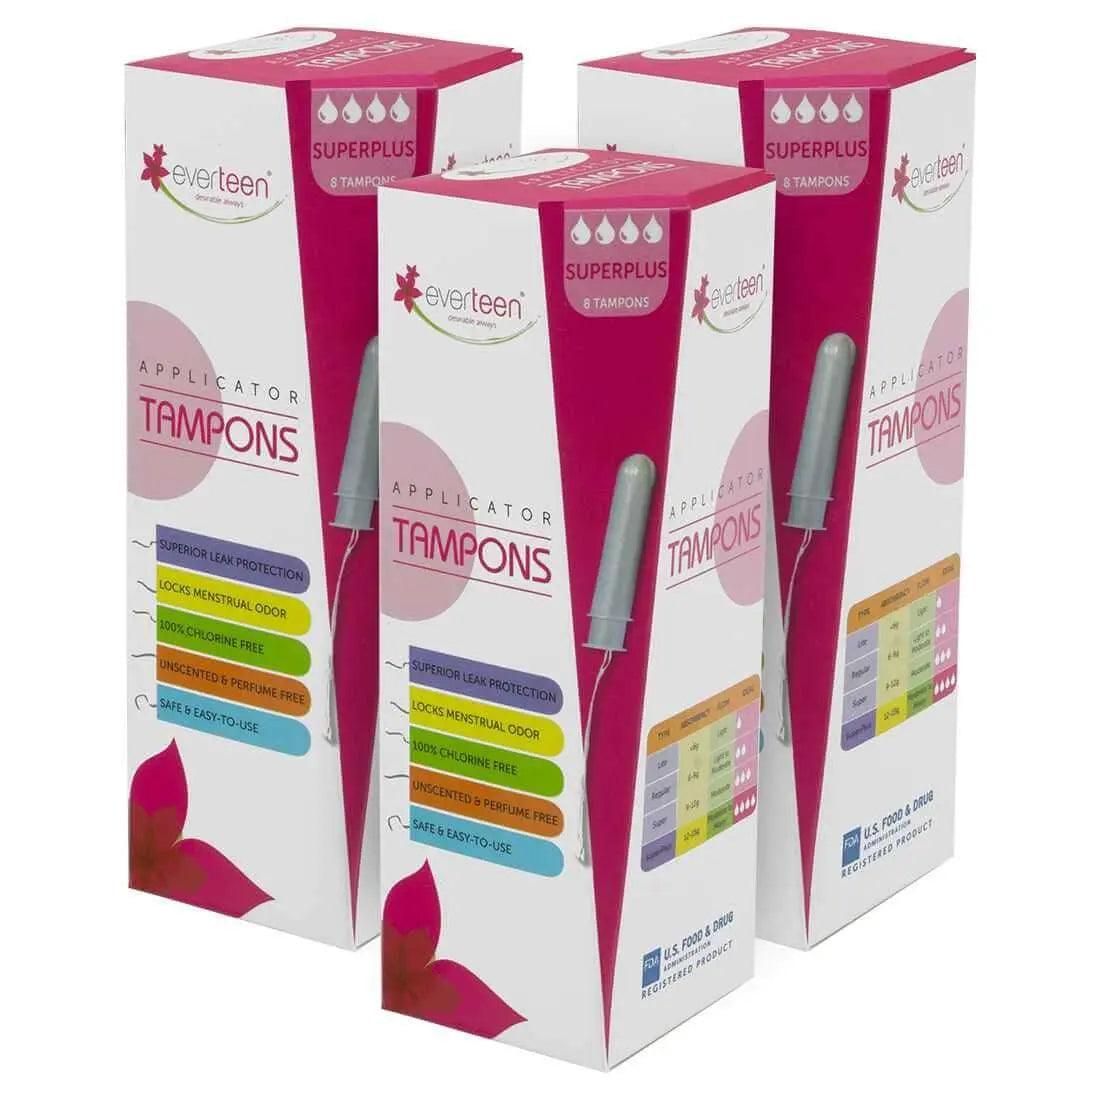 everteen Applicator Tampons for Menstrual Periods in Women 8903540009828